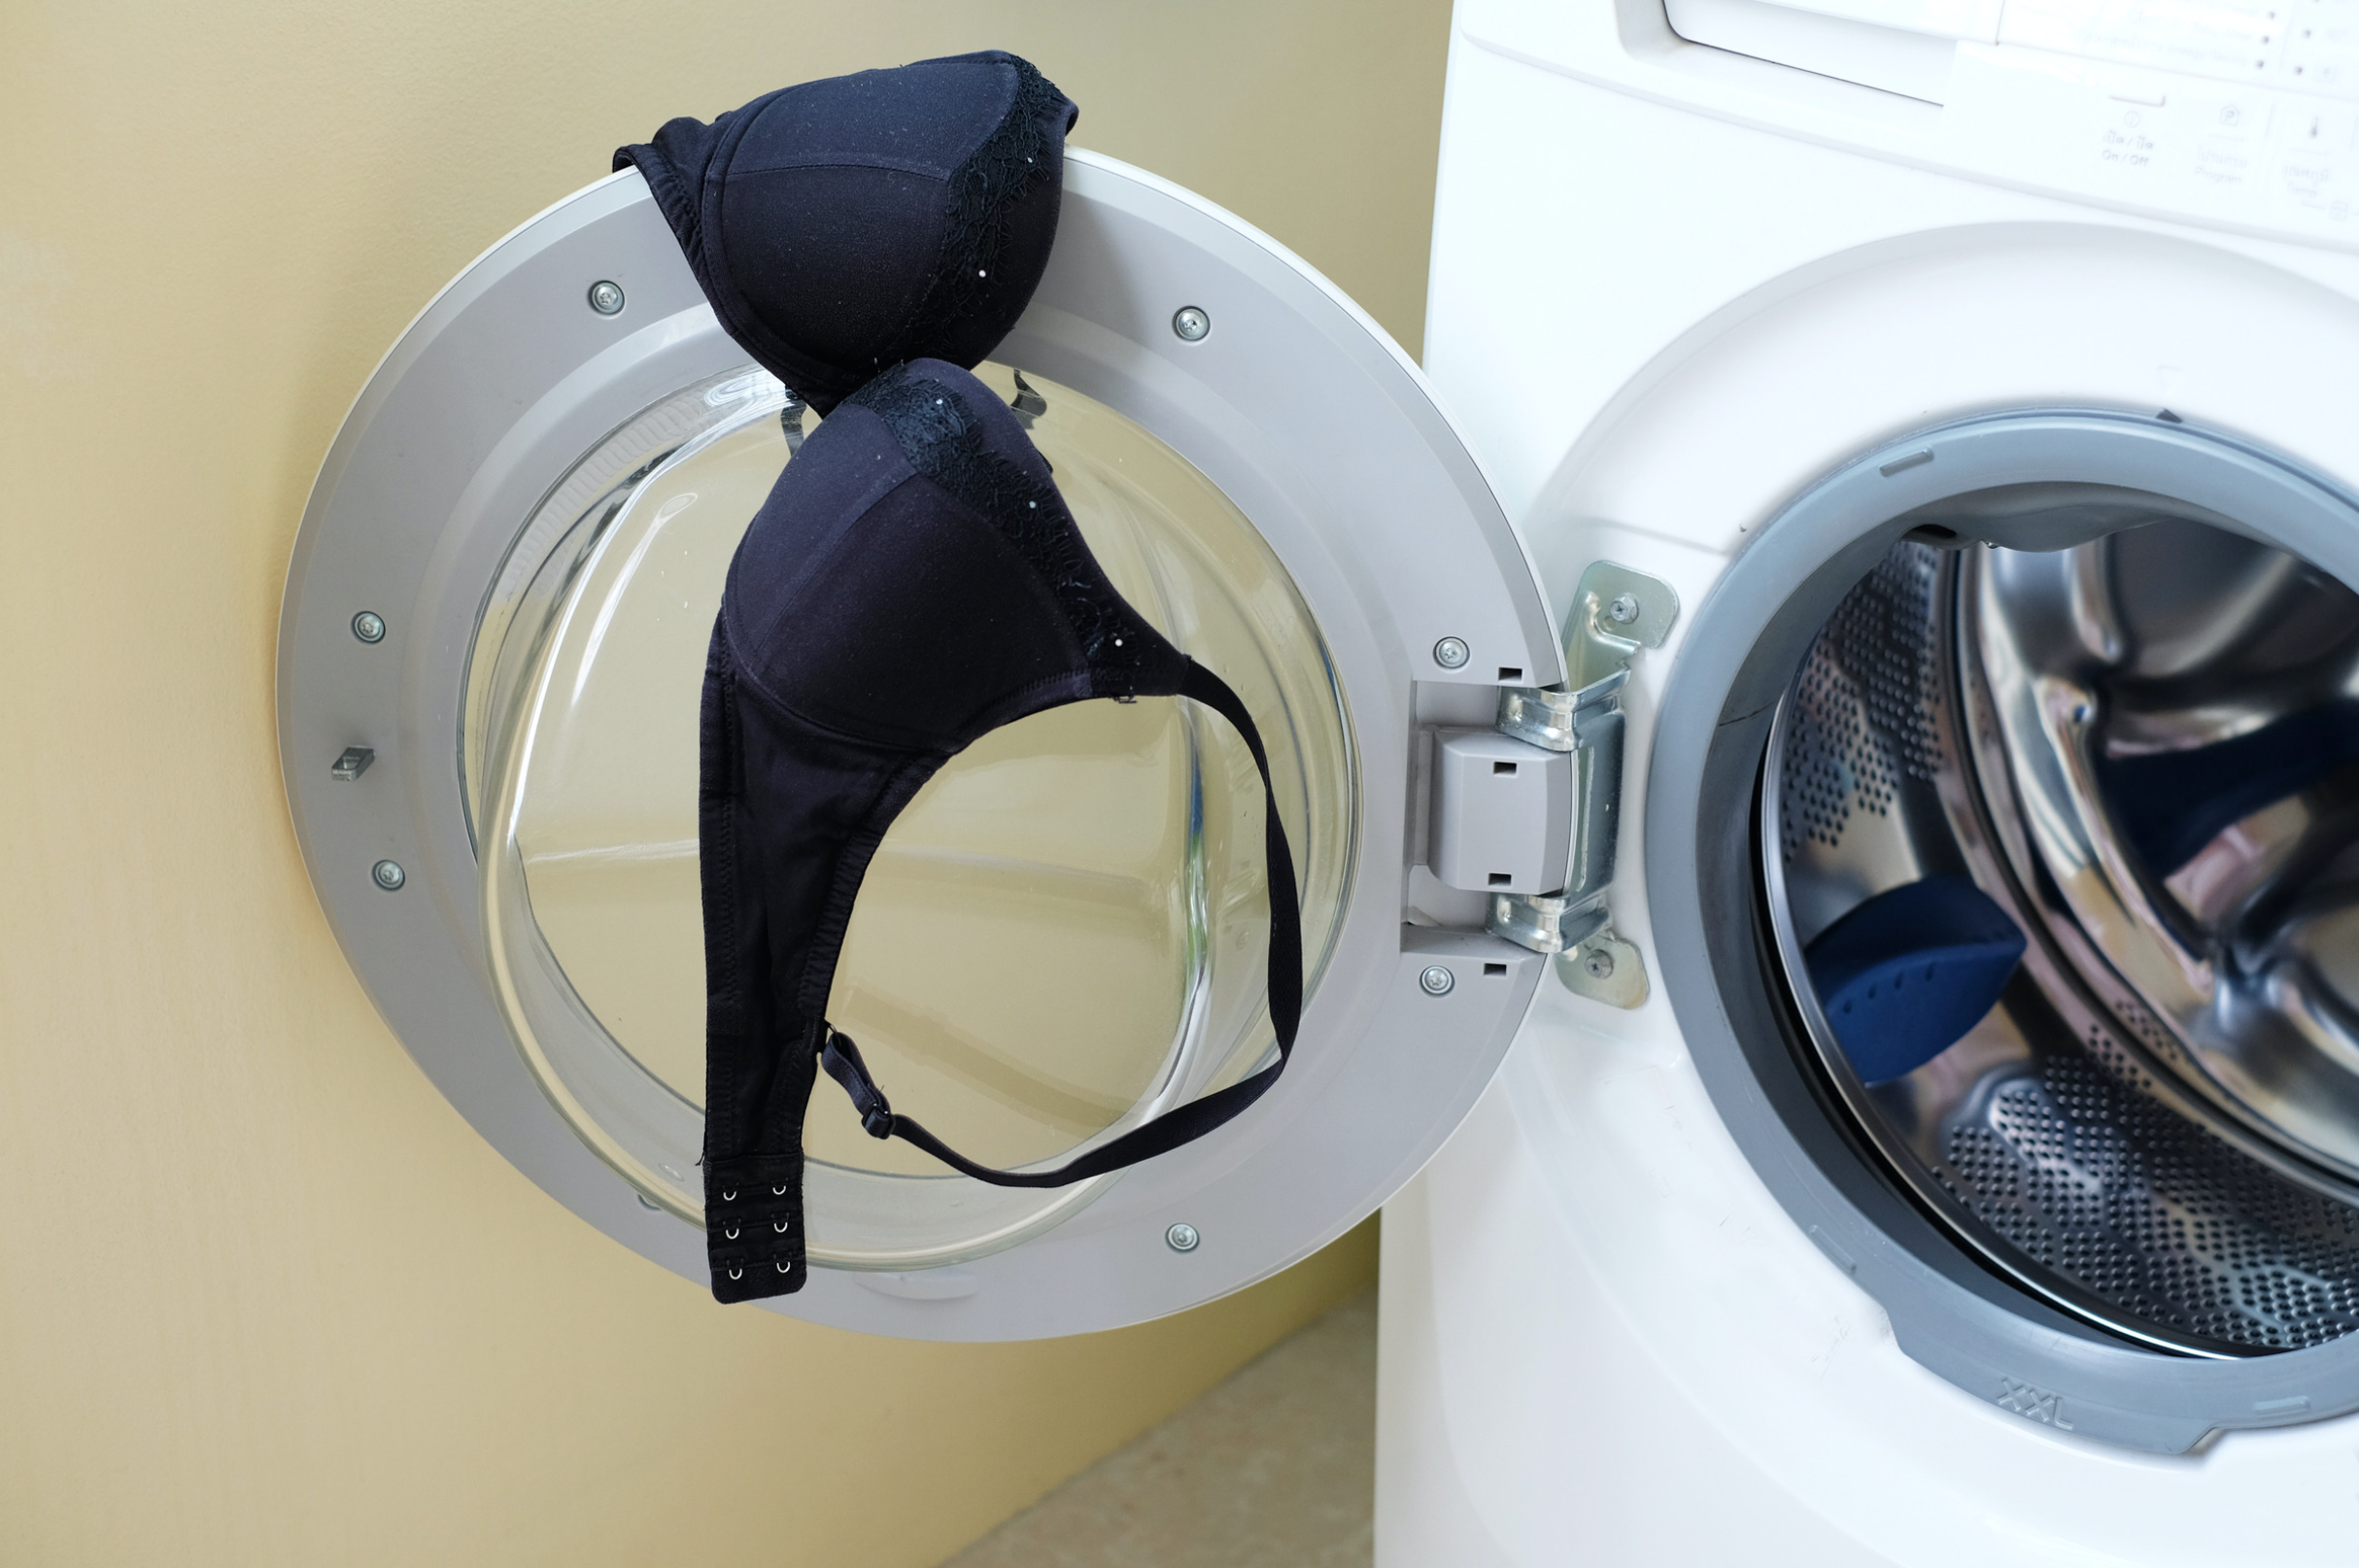 Rules to Follow When Washing Bras in a Washing Machine